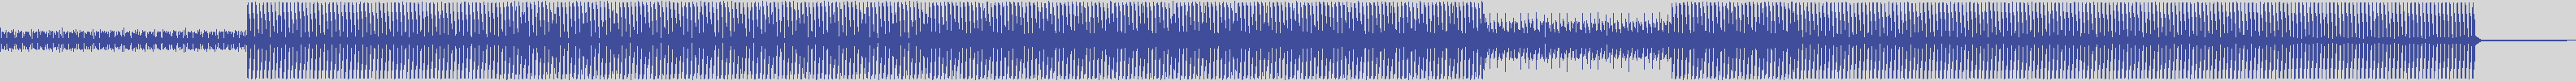 nf_boyz_records [NFY056] Dj Gandall - Birimbo [Tribe Mix] audio wave form